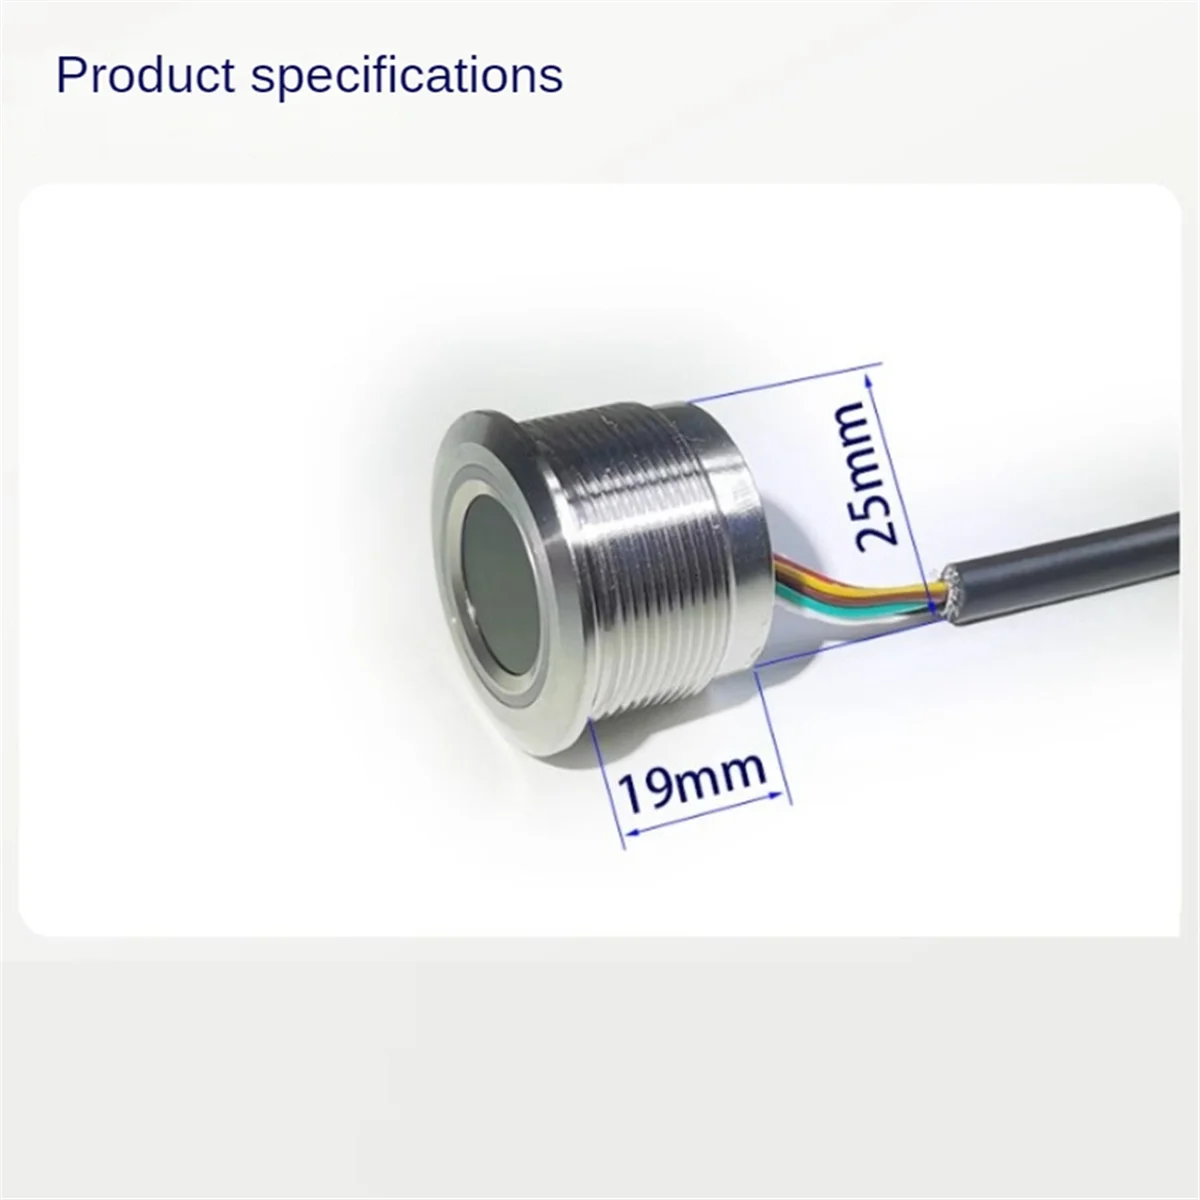 R503pro 3,3 Kapazität runde RGB-LED-Steuerung DC V kapazitiver Fingerabdruckmodul-Sensors canner für die Zugangs kontrolle, USB